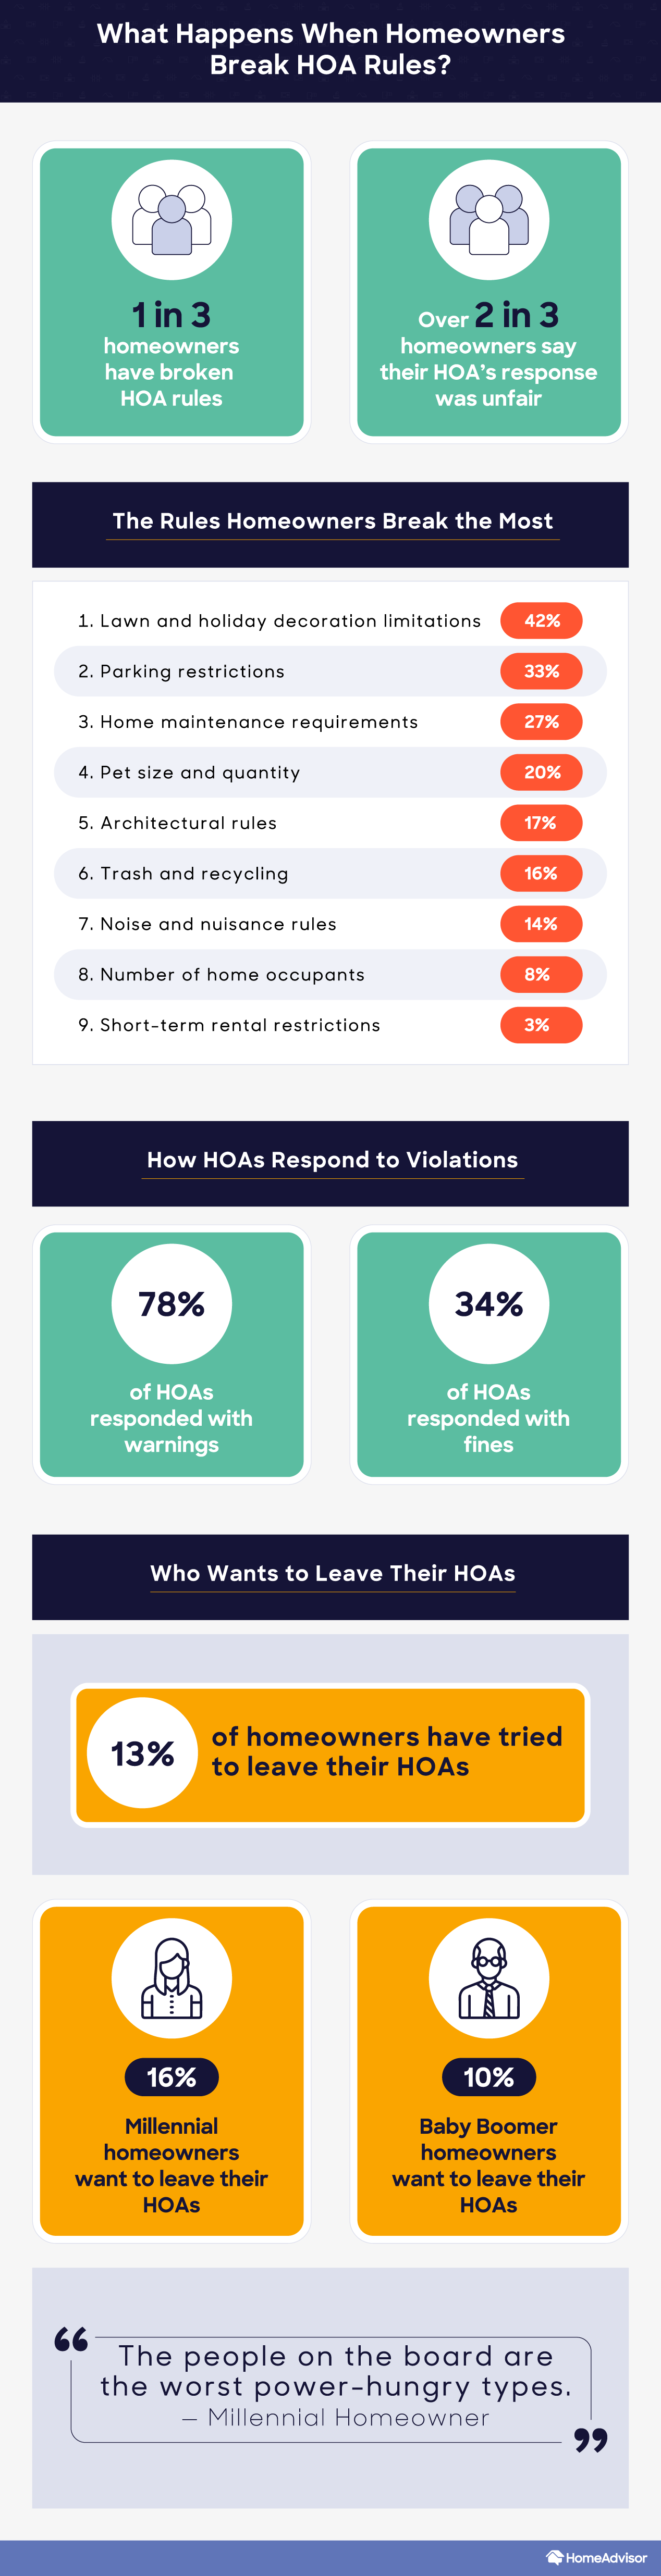 what happens when homeowners break HOA rules